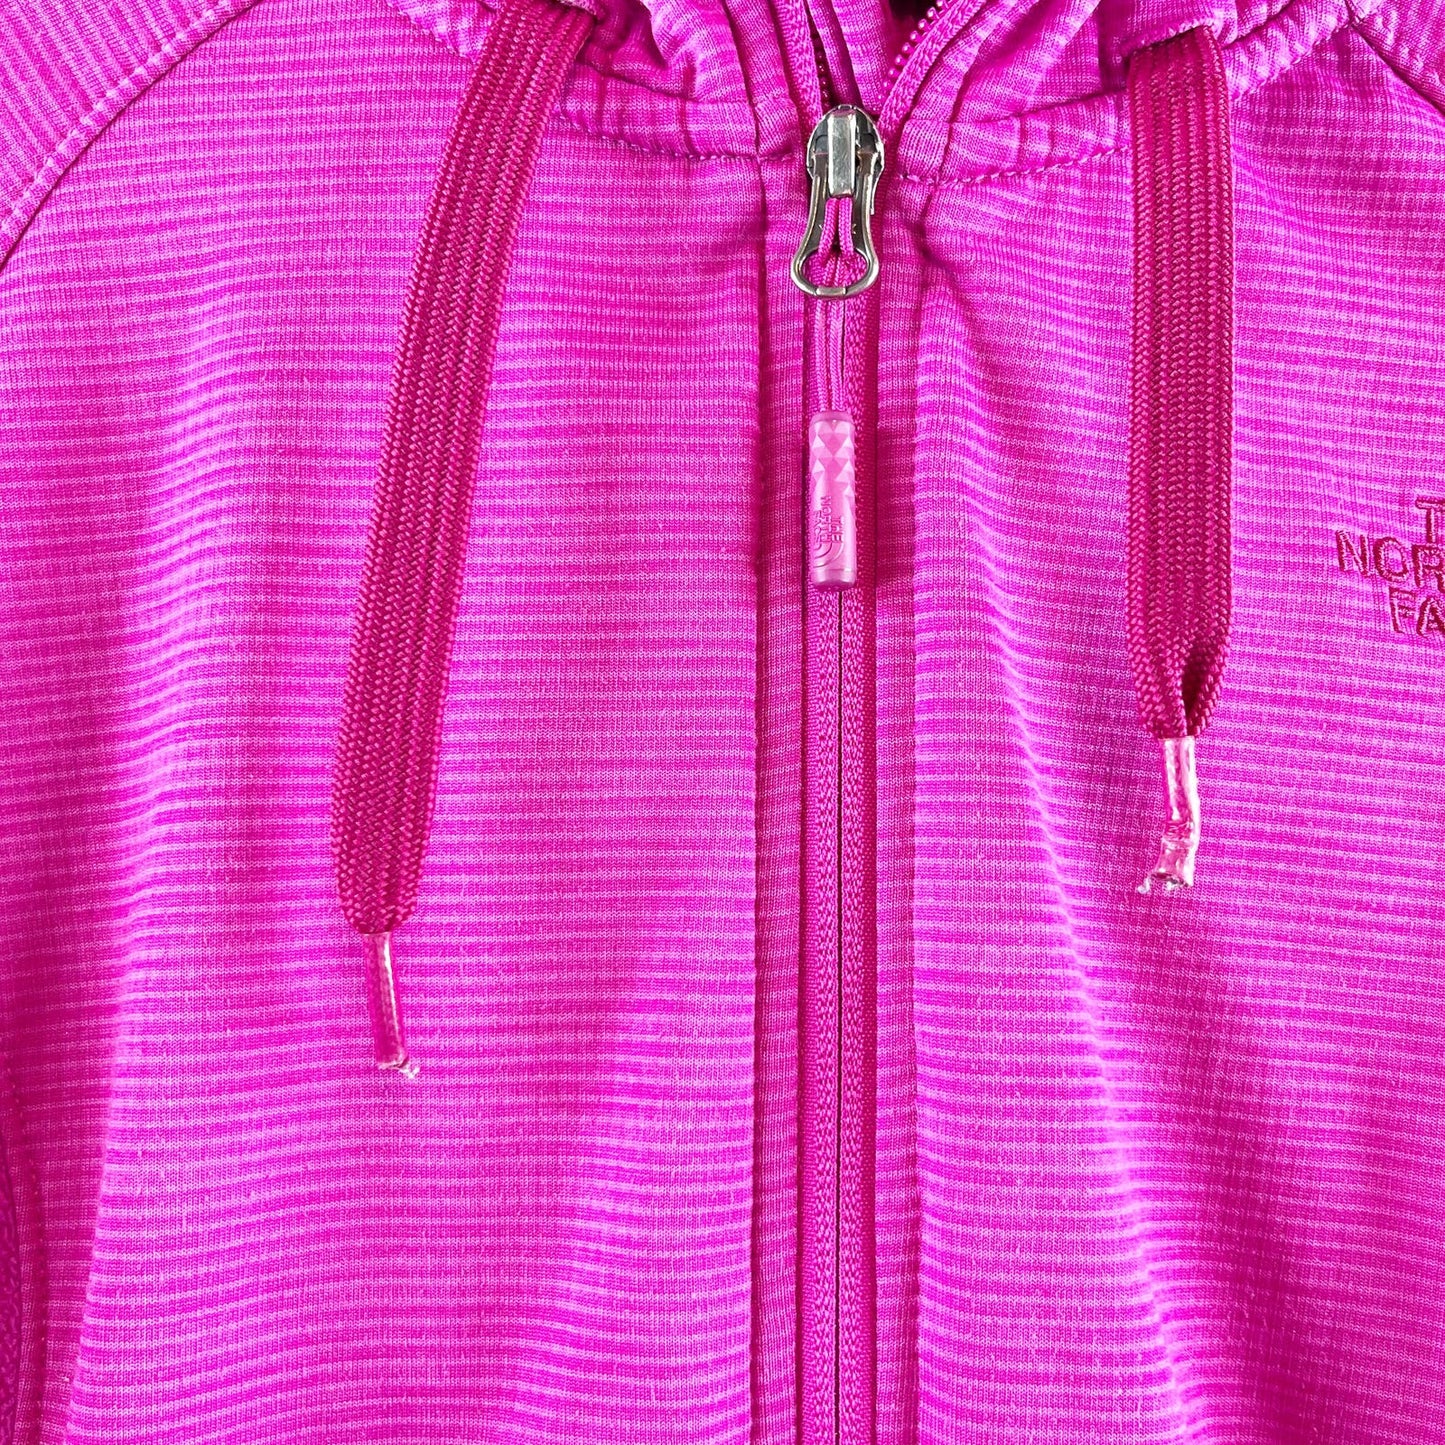 The North Face Full Zip Hooded Sweatshirt Jacket Pink Medium